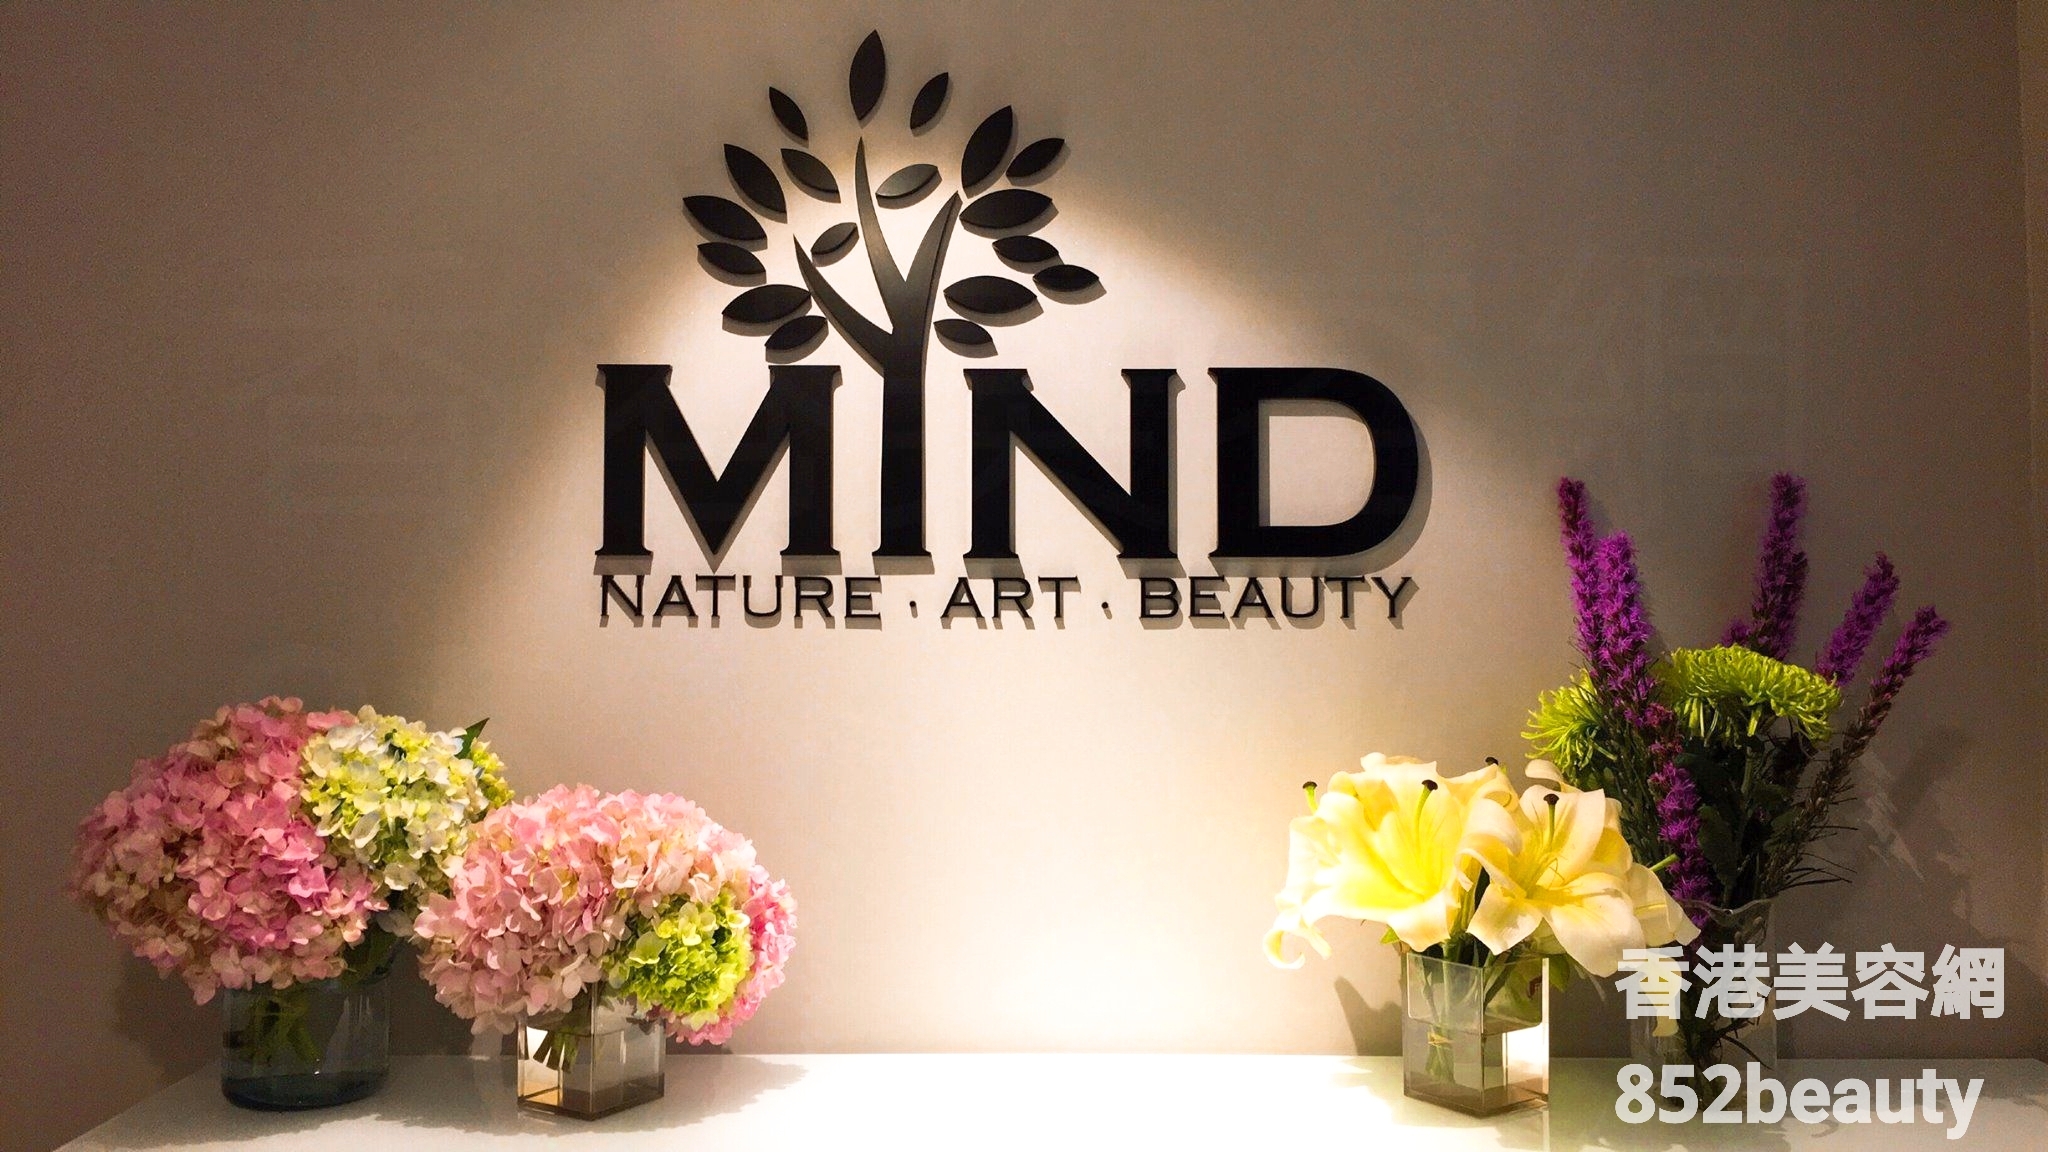 香港美容網 Hong Kong Beauty Salon 美容院 / 美容師: MIND nature art beauty